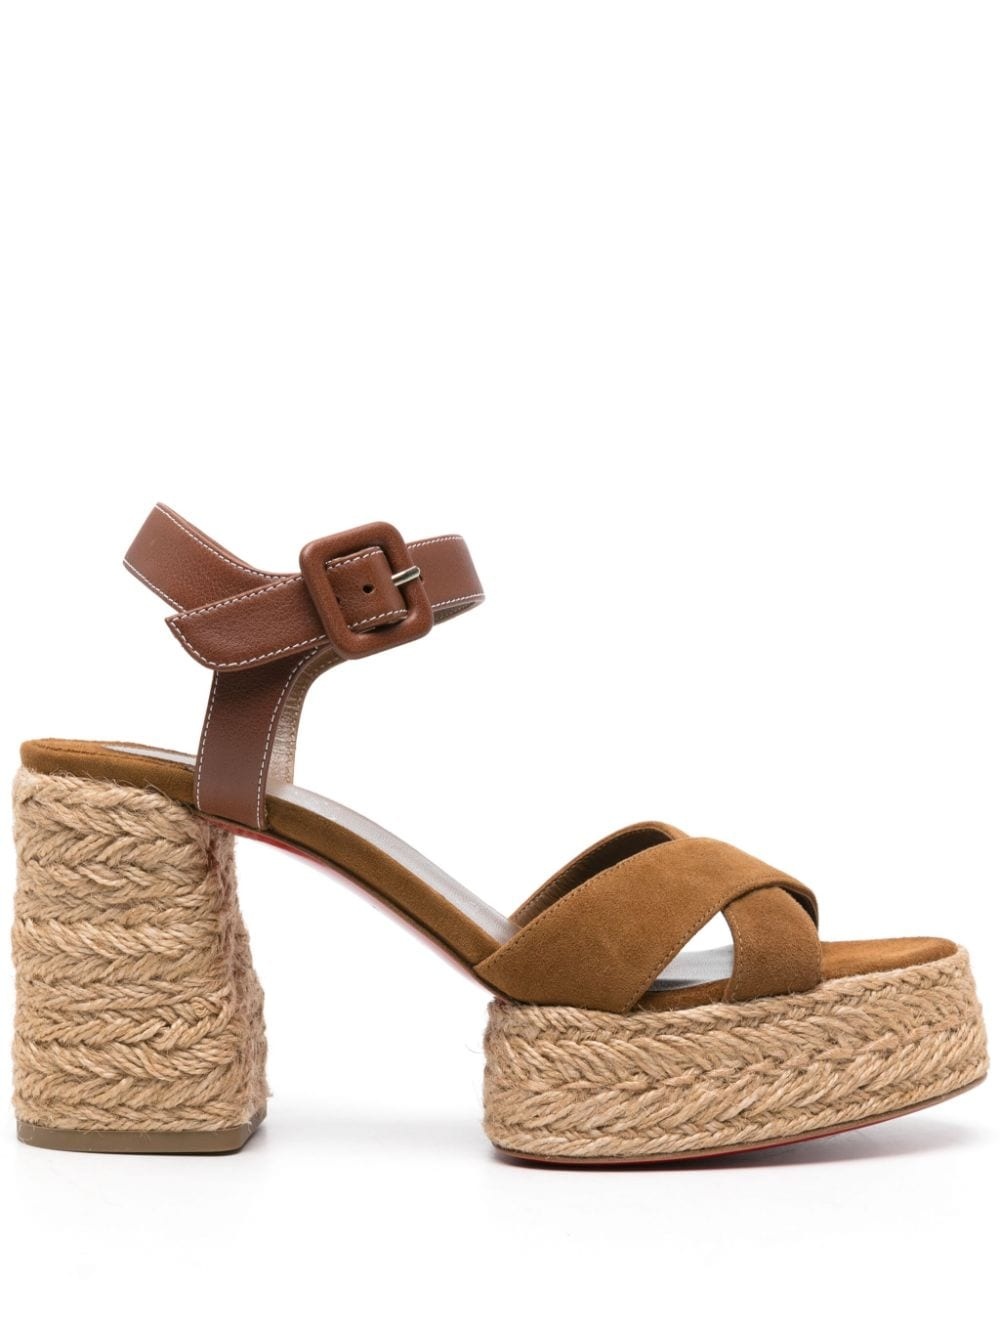 Calakala 70mm leather sandals - 1